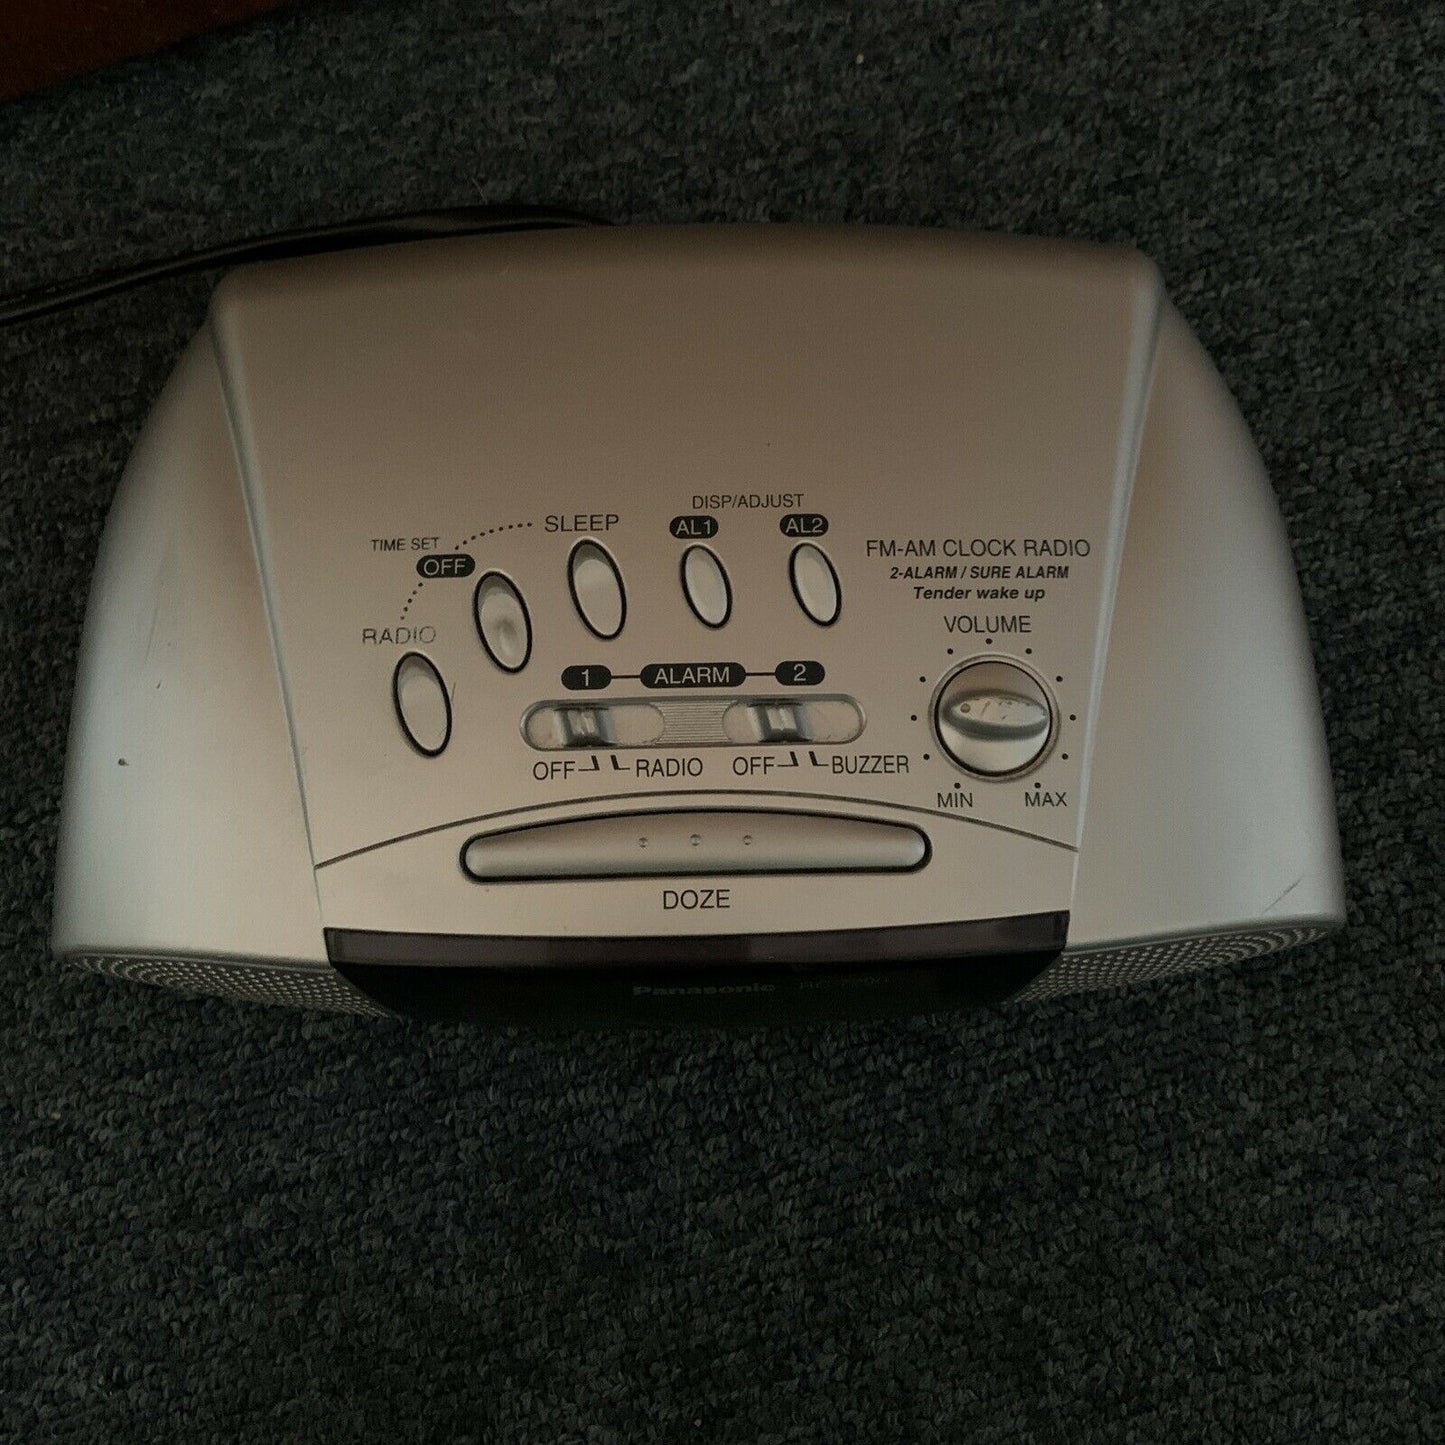 Vintage Panasonic RC-7290 Dual Alarm Clock AM/FM Radio